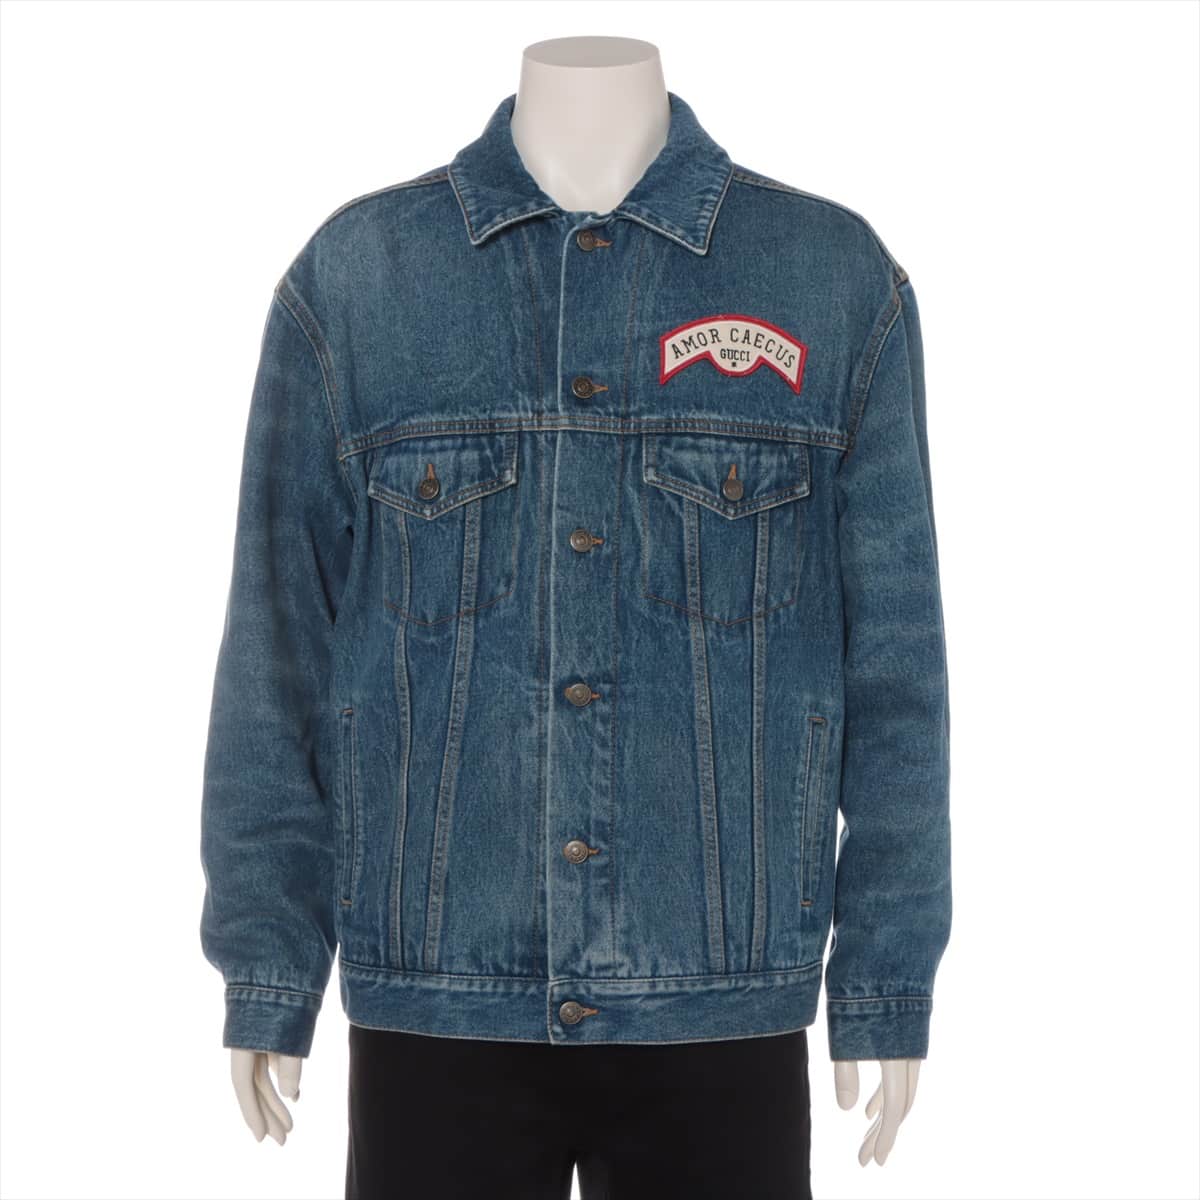 Gucci 19SS Cotton Denim jacket 44 Men's Blue indigo  475024 Oversize Denim Jacket with Patches